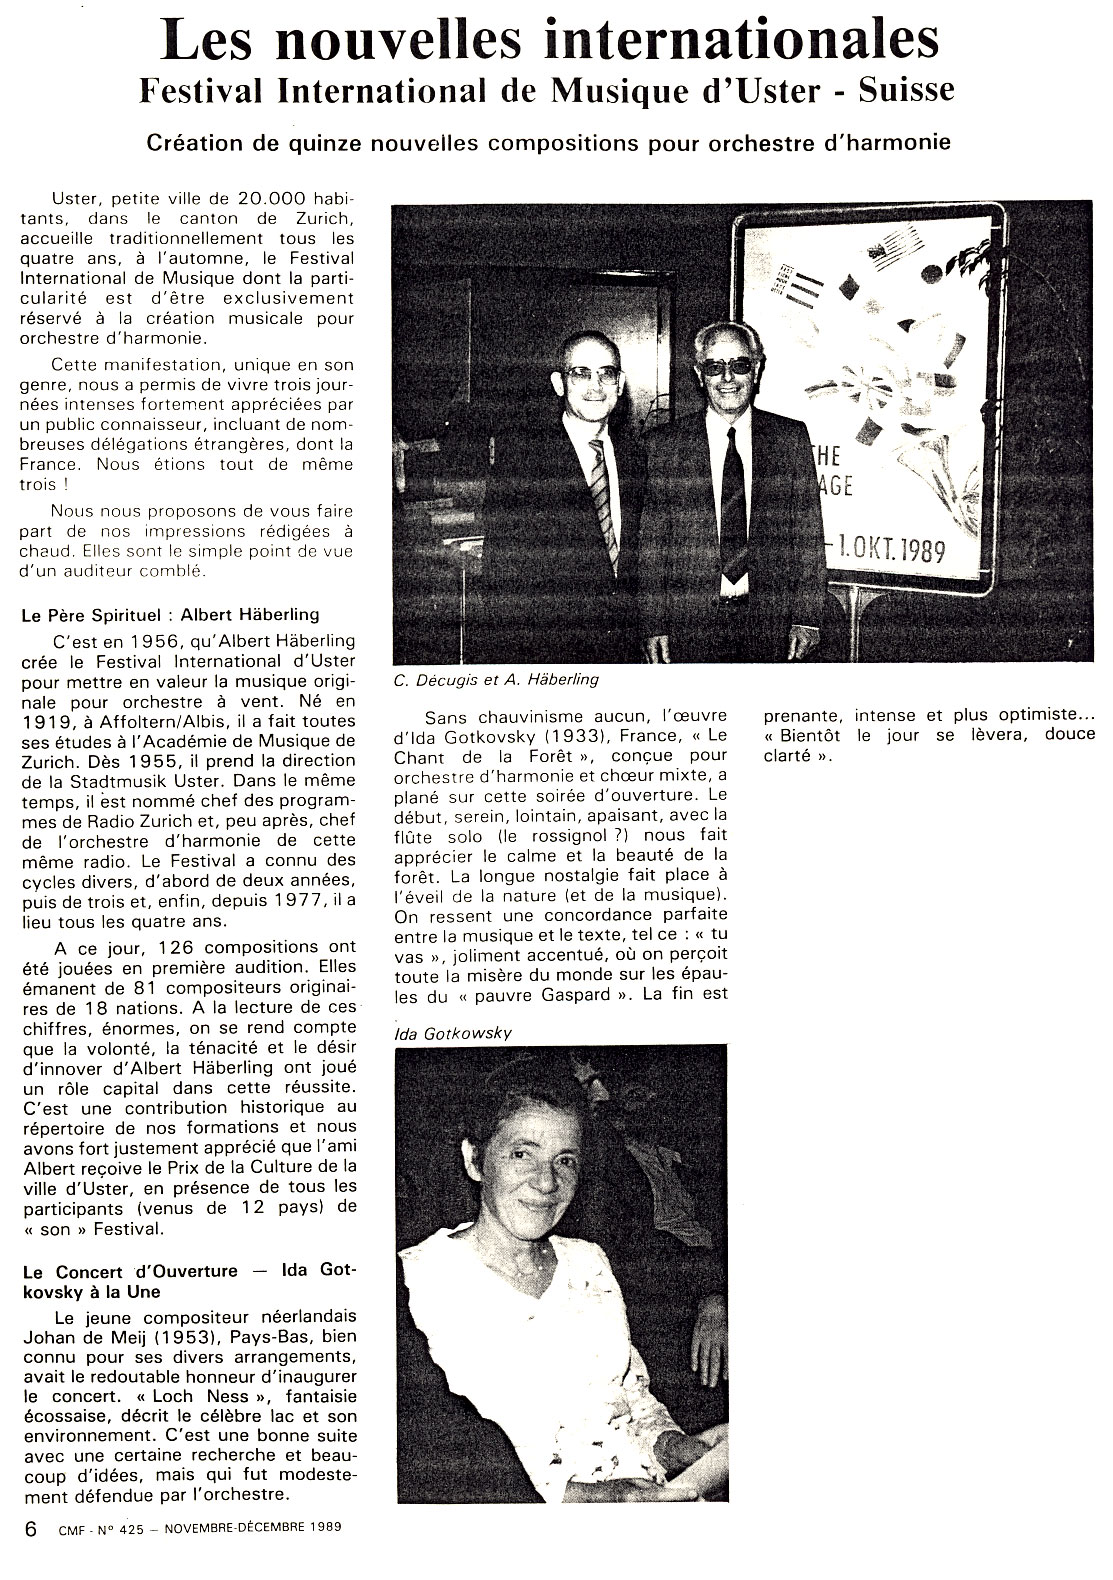 Journal de la CMF - n°425 - Nov/Dec 1989